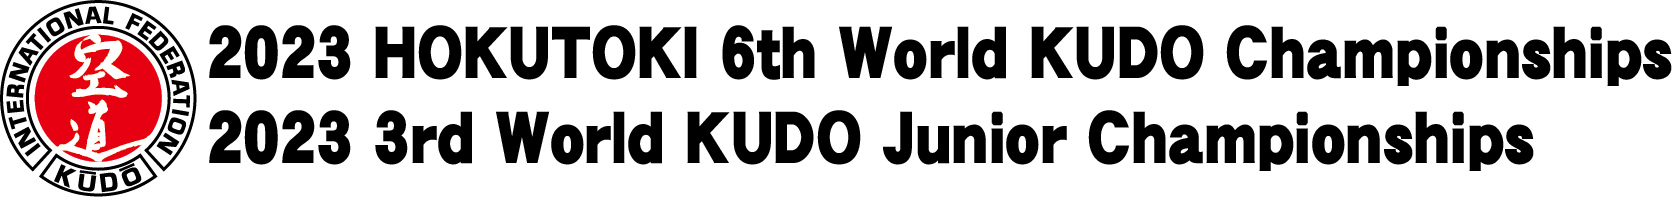 2023 HOKUTOKI 6th World KUDO Championships 2023 3rd World KUDO Junior Championships